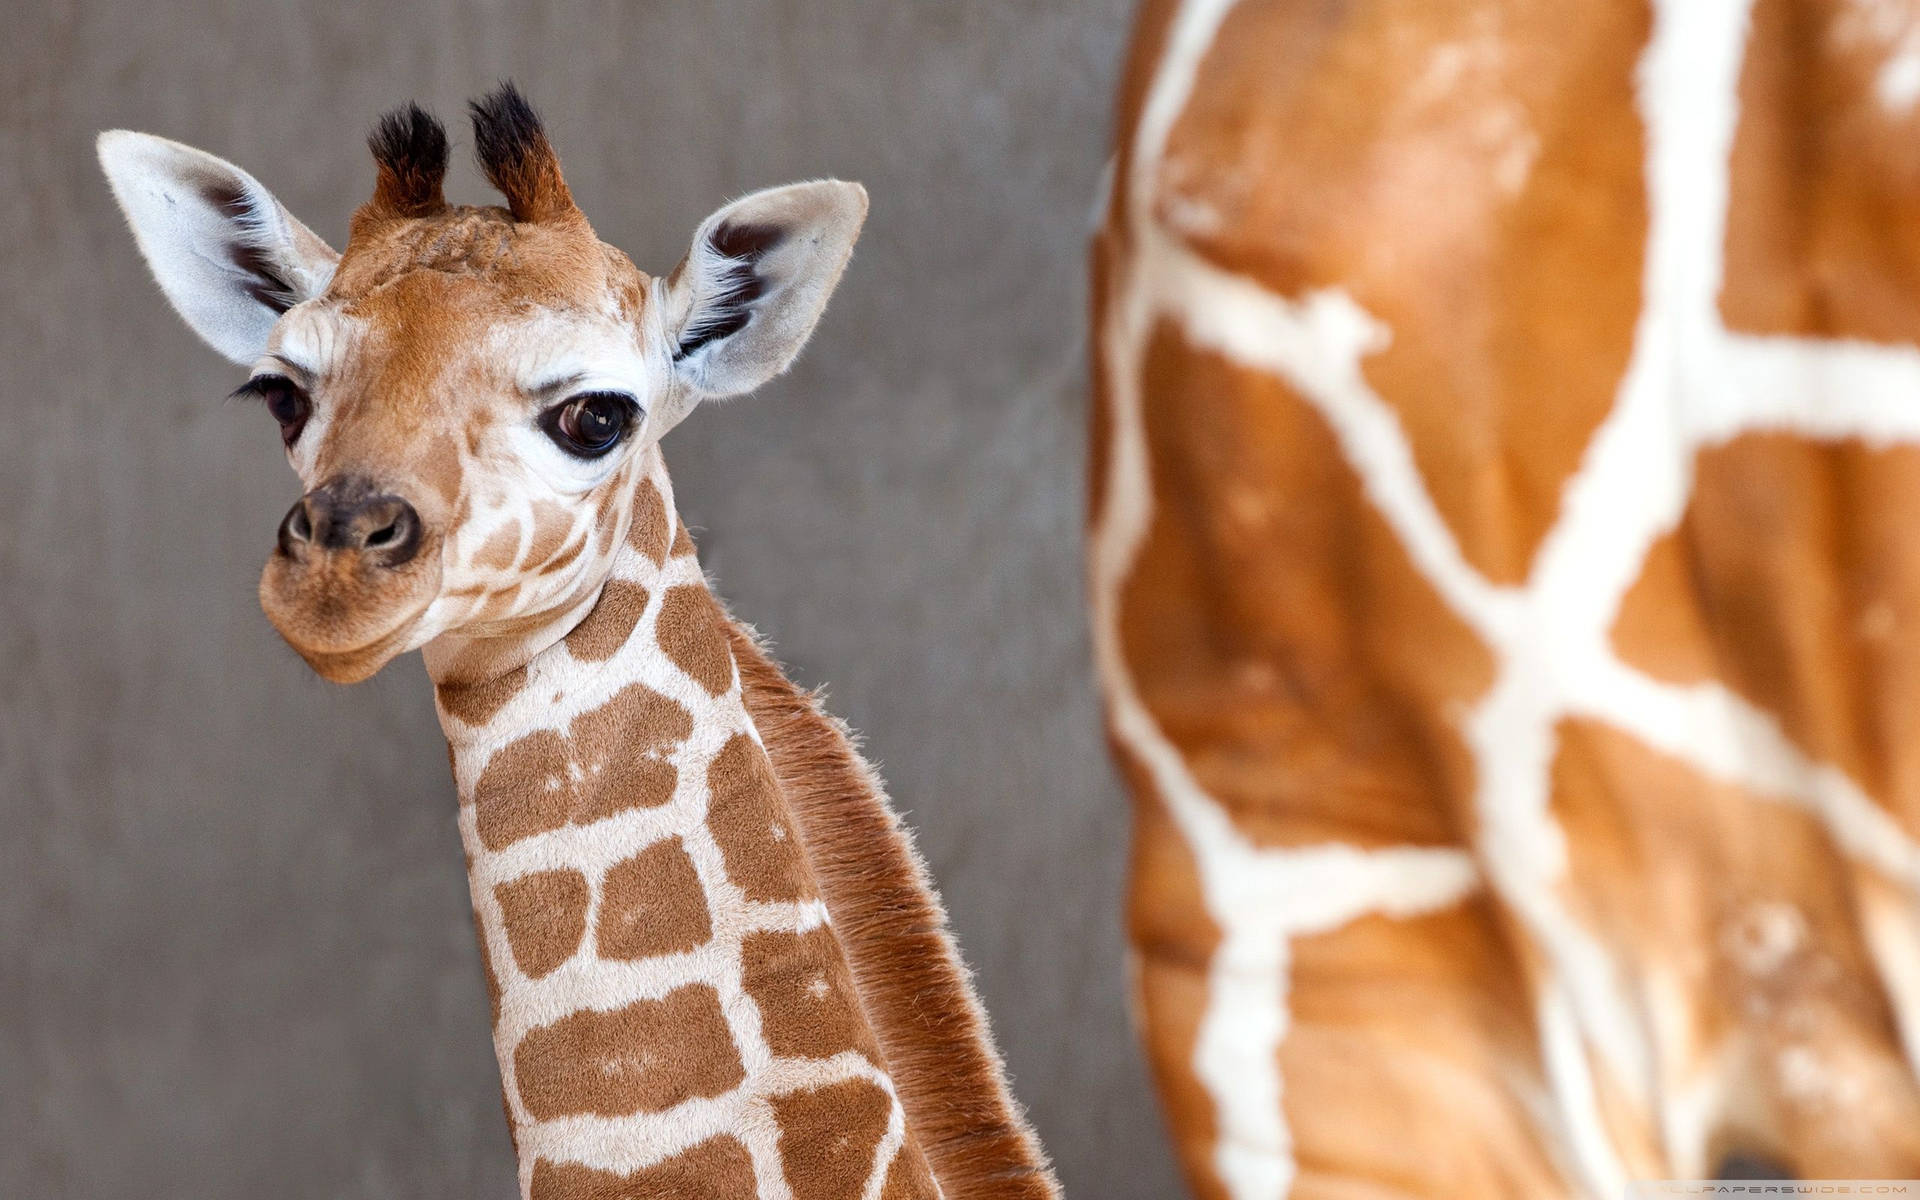 Baby Giraffe Brown Markings